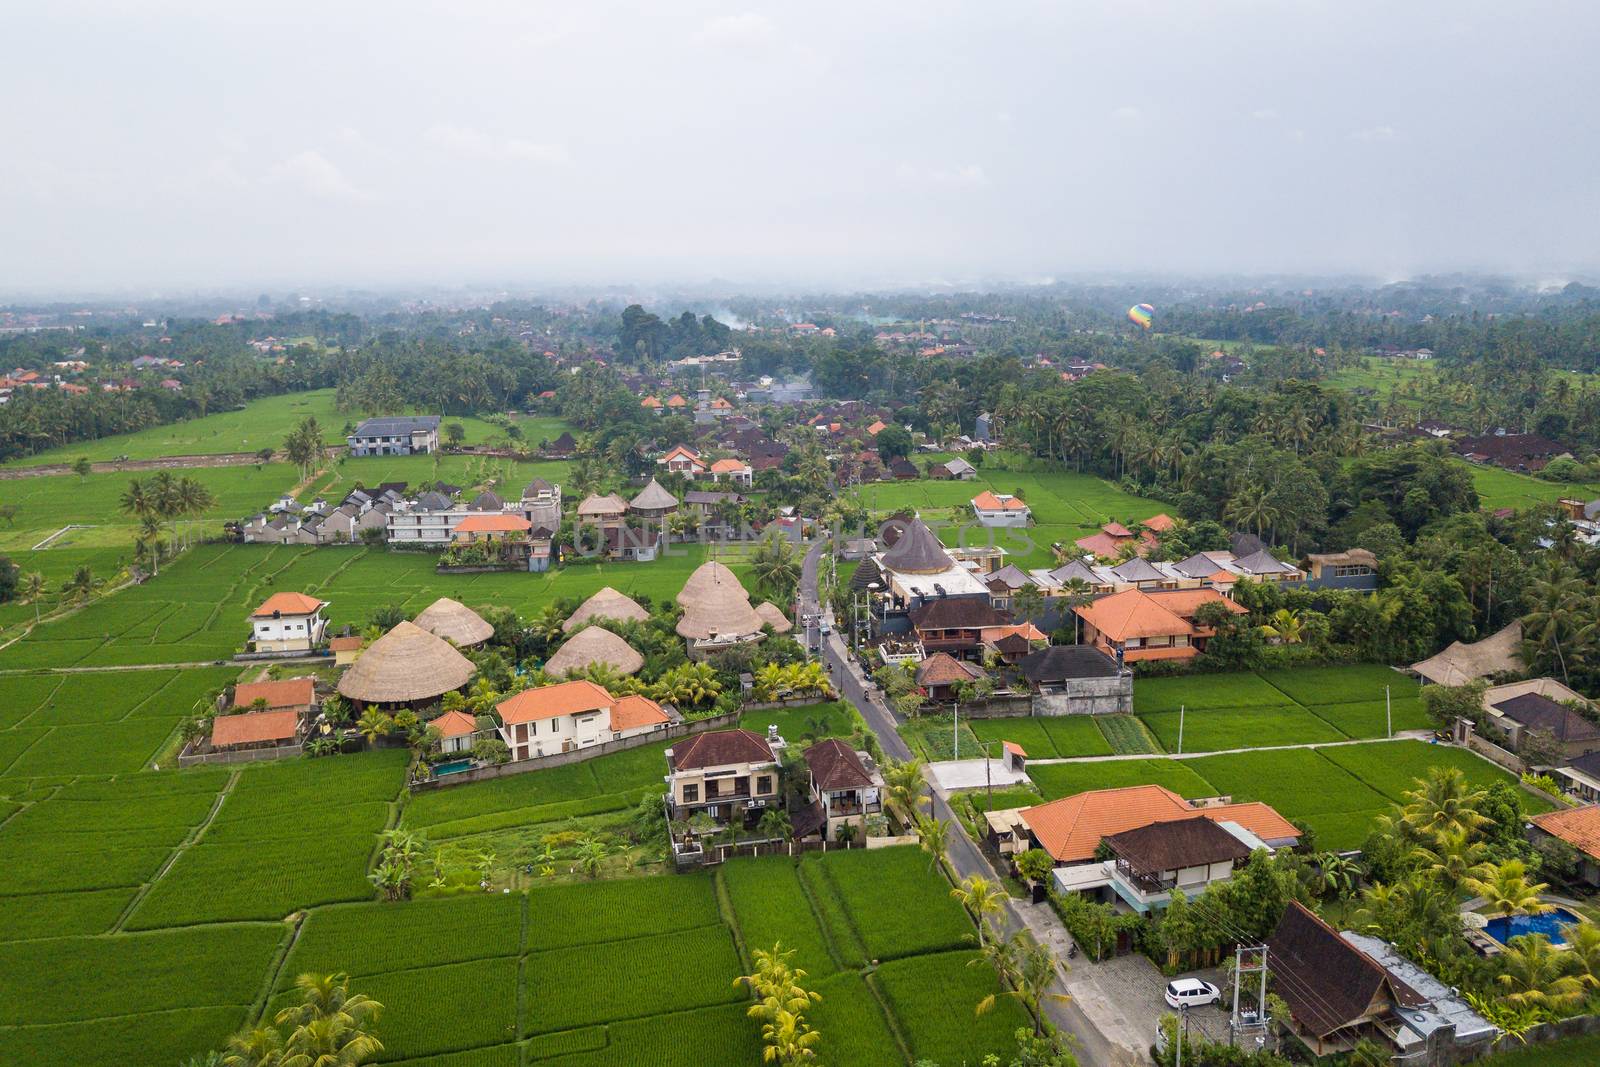 Aerial view of Ubud countryside in Bali by dutourdumonde